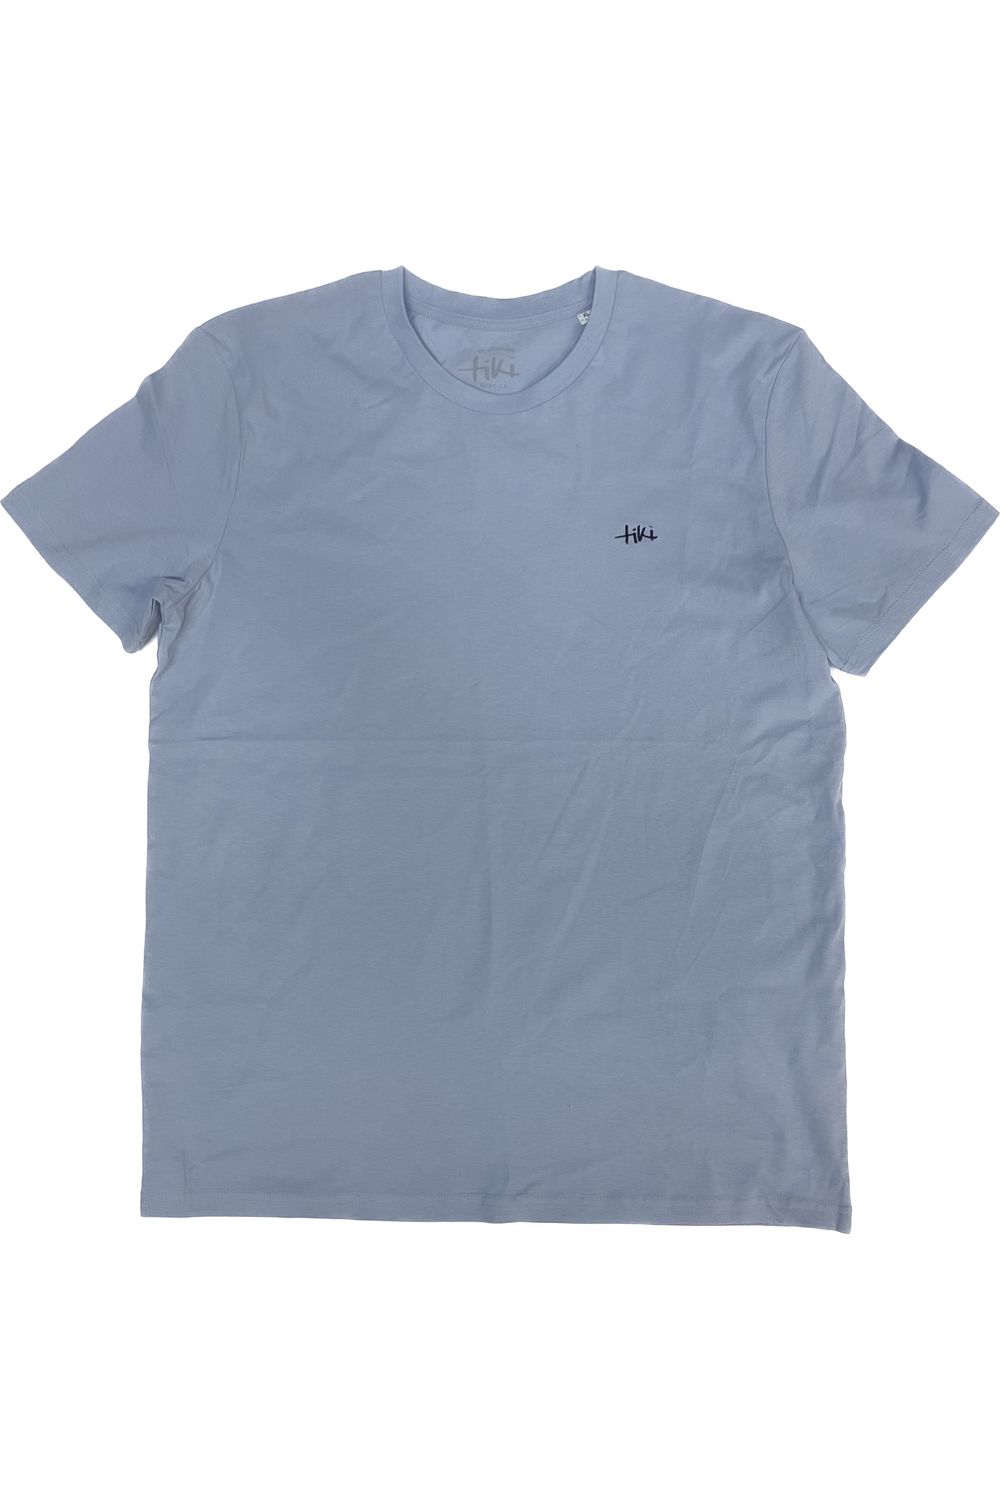 Tiki Unisex Classic Short Sleeve T-Shirt Serene Blue